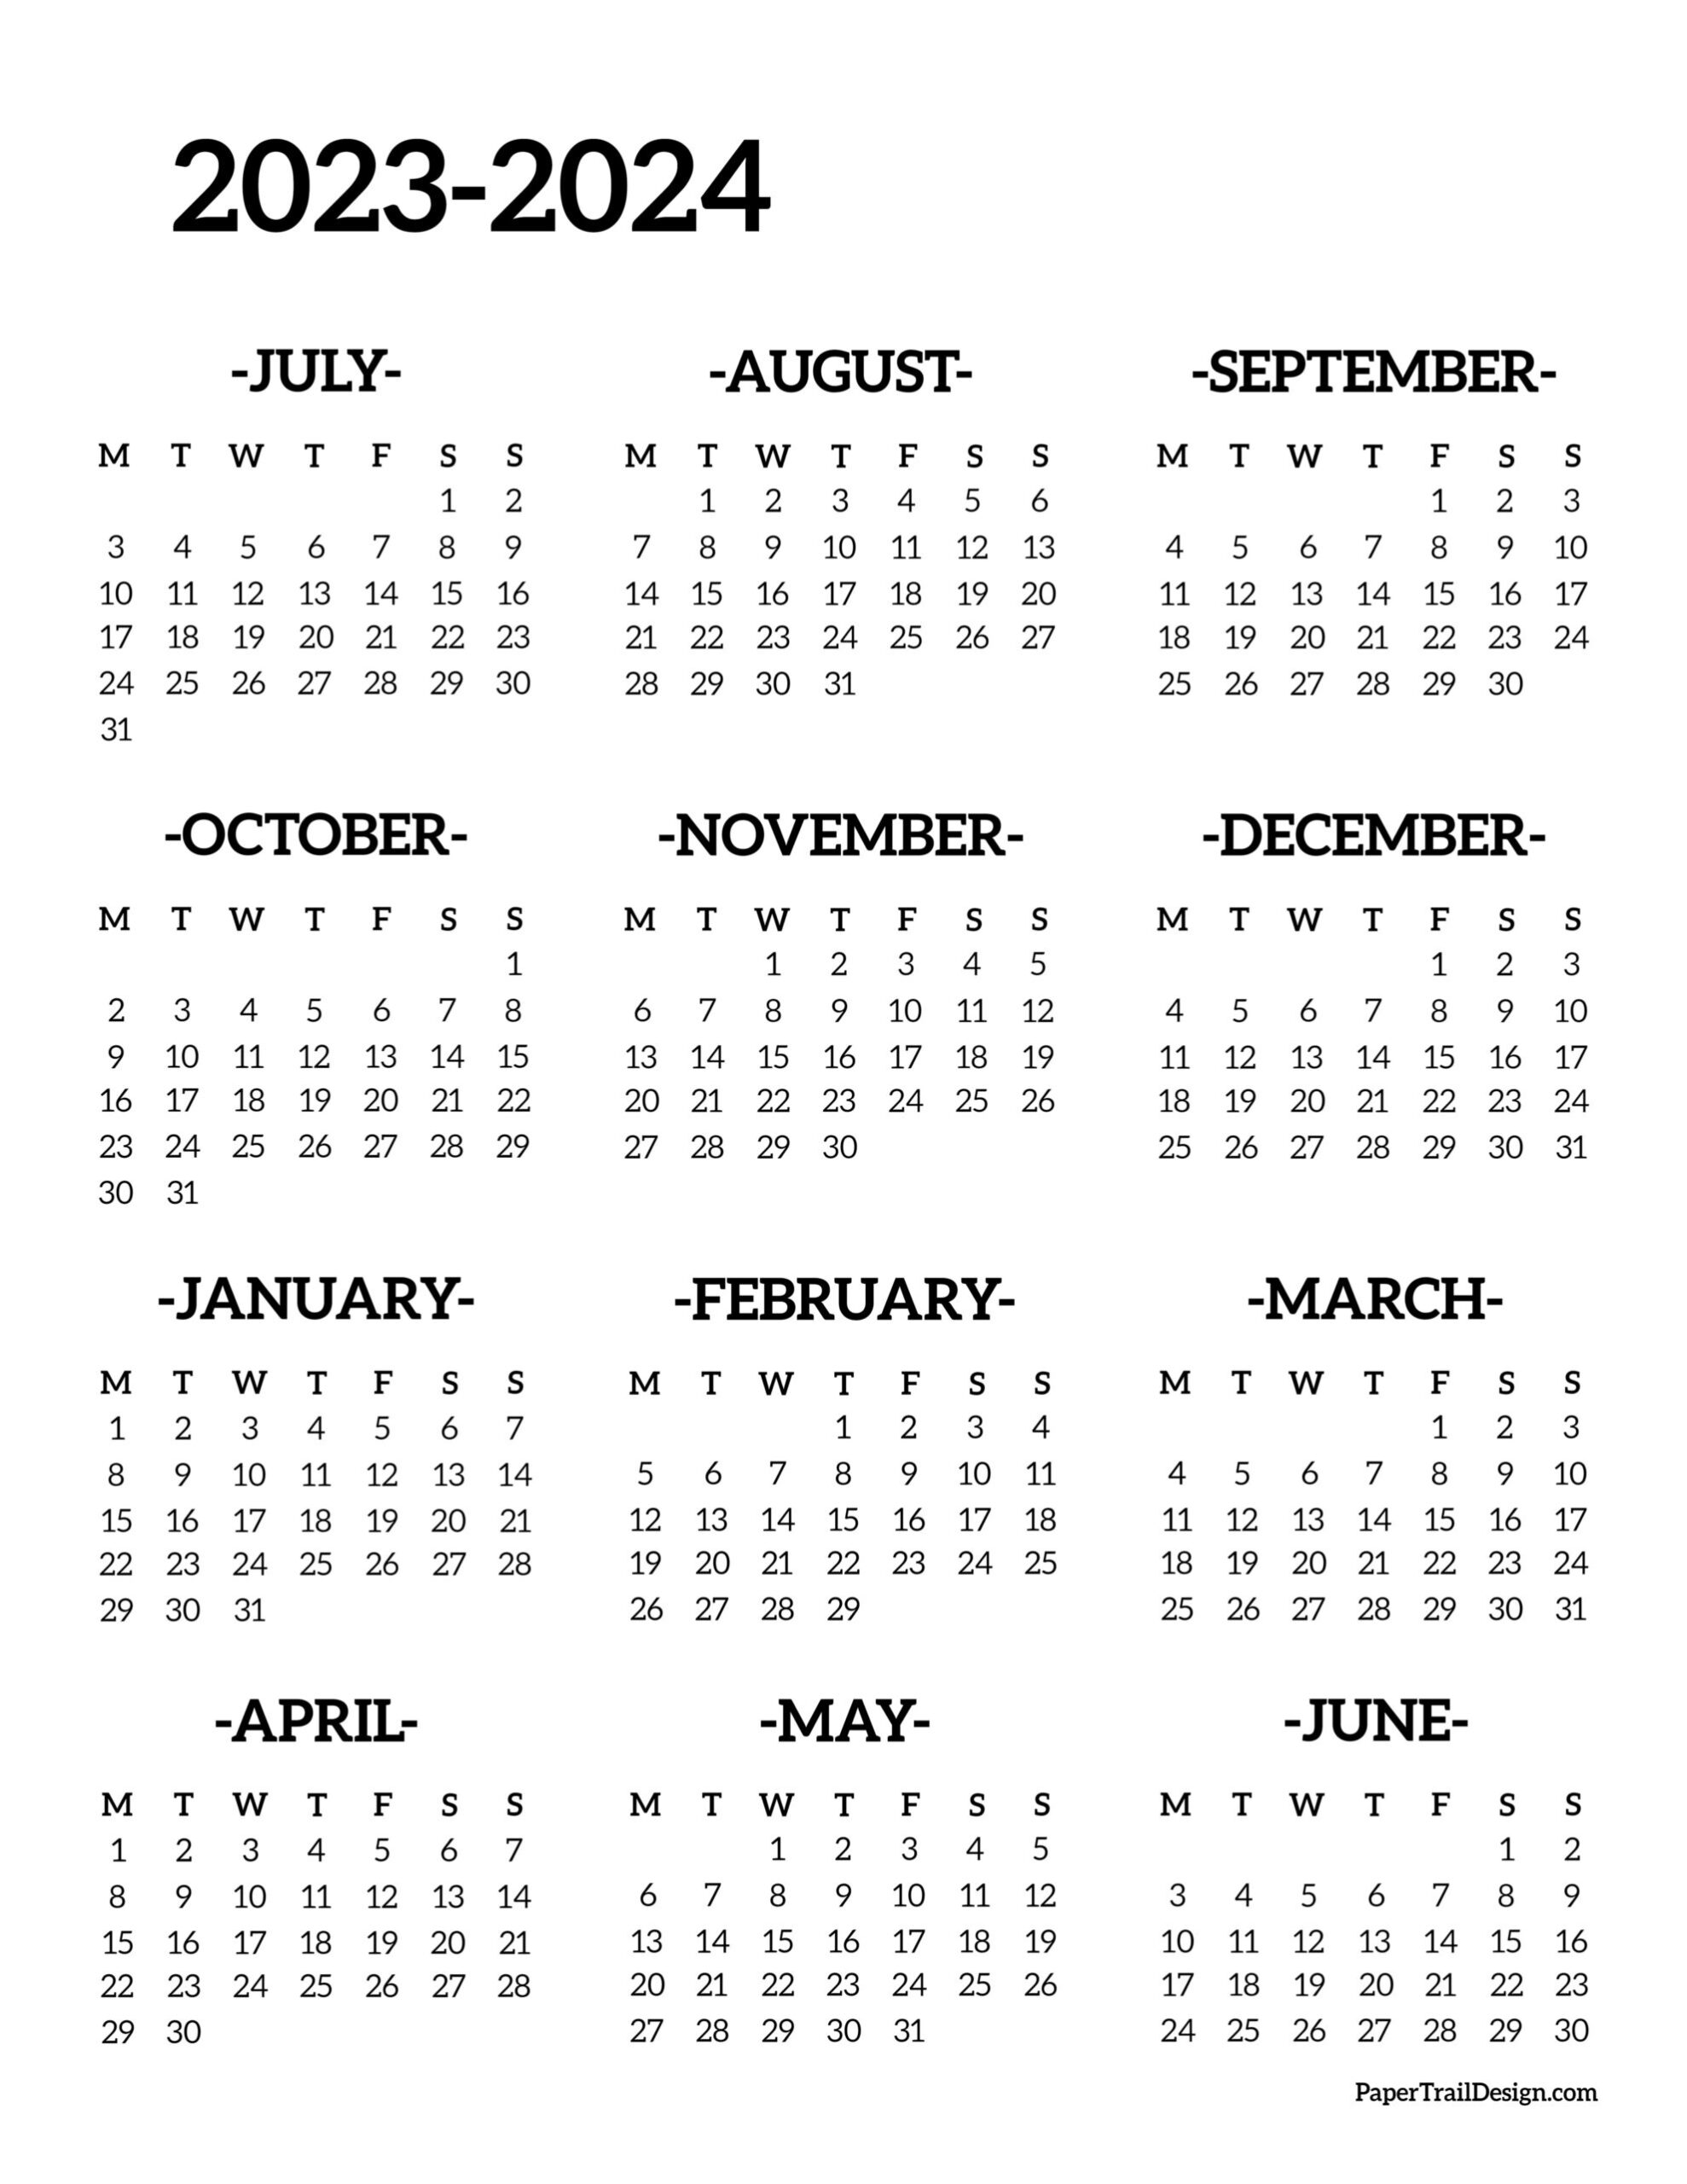 2023-2024 School Year Calendar Free Printable - Paper Trail Design inside July 2023-2024 Calendar